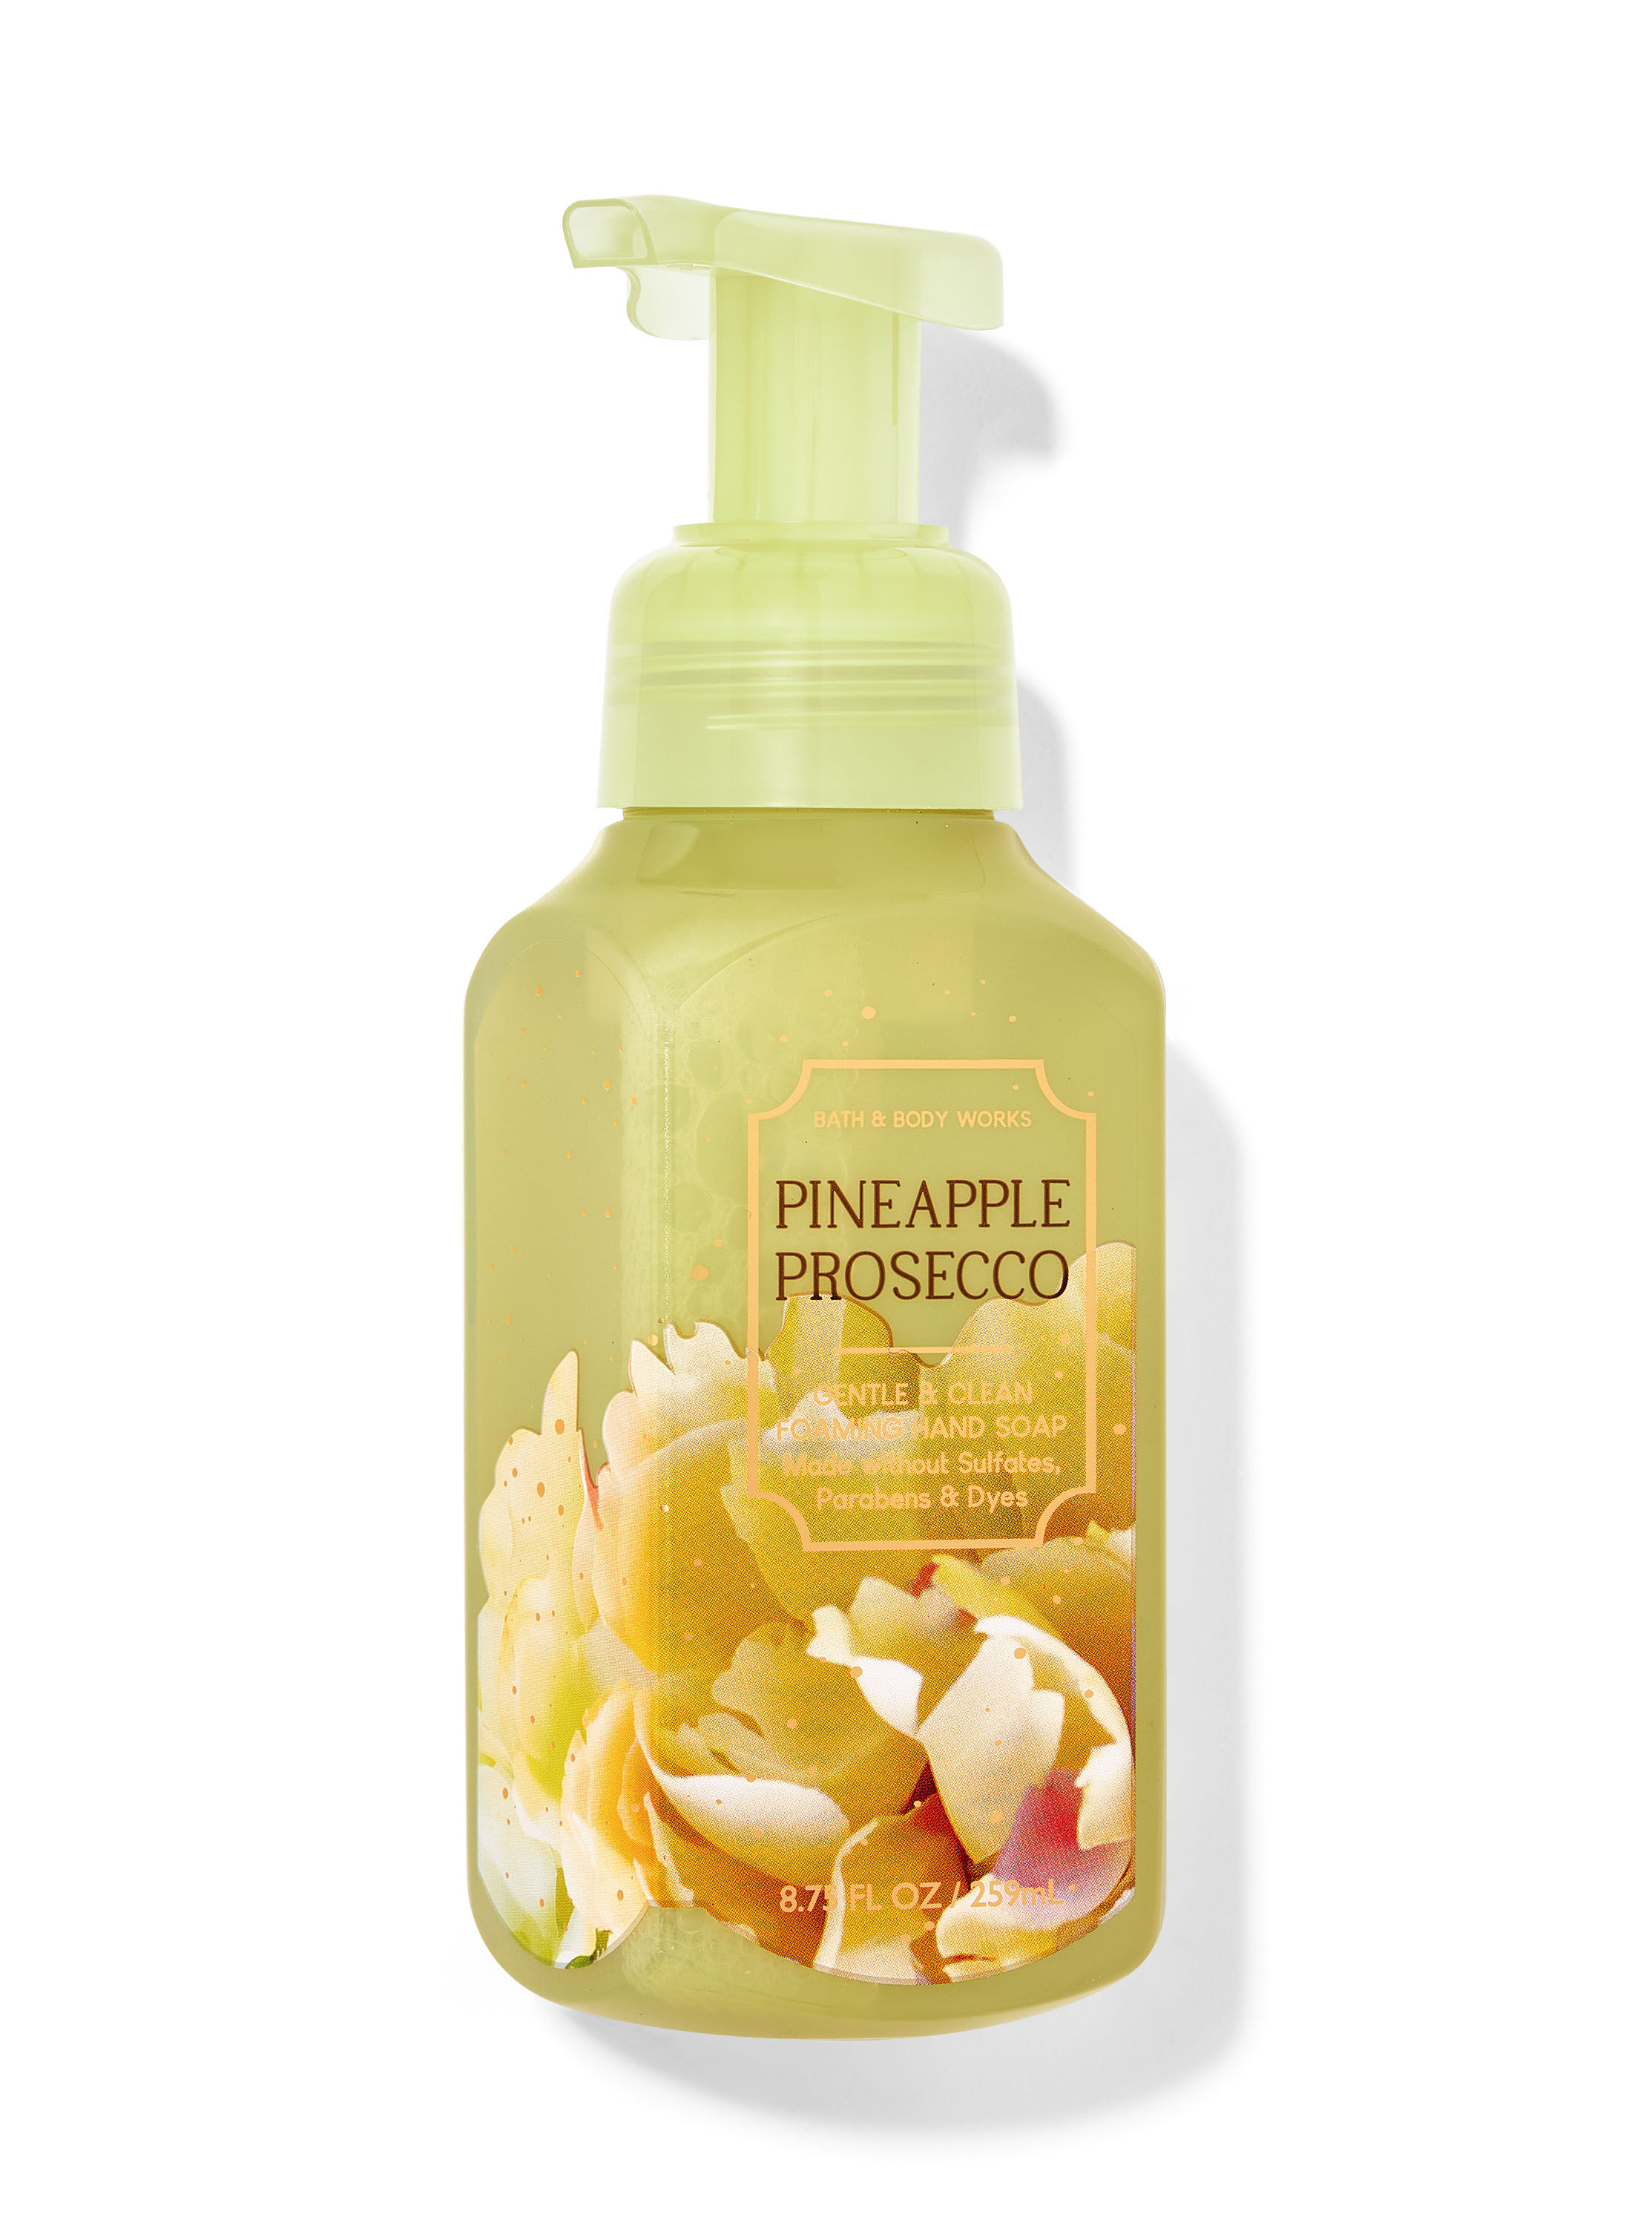 Pineapple Prosecco Gentle & Clean Foaming Hand Soap